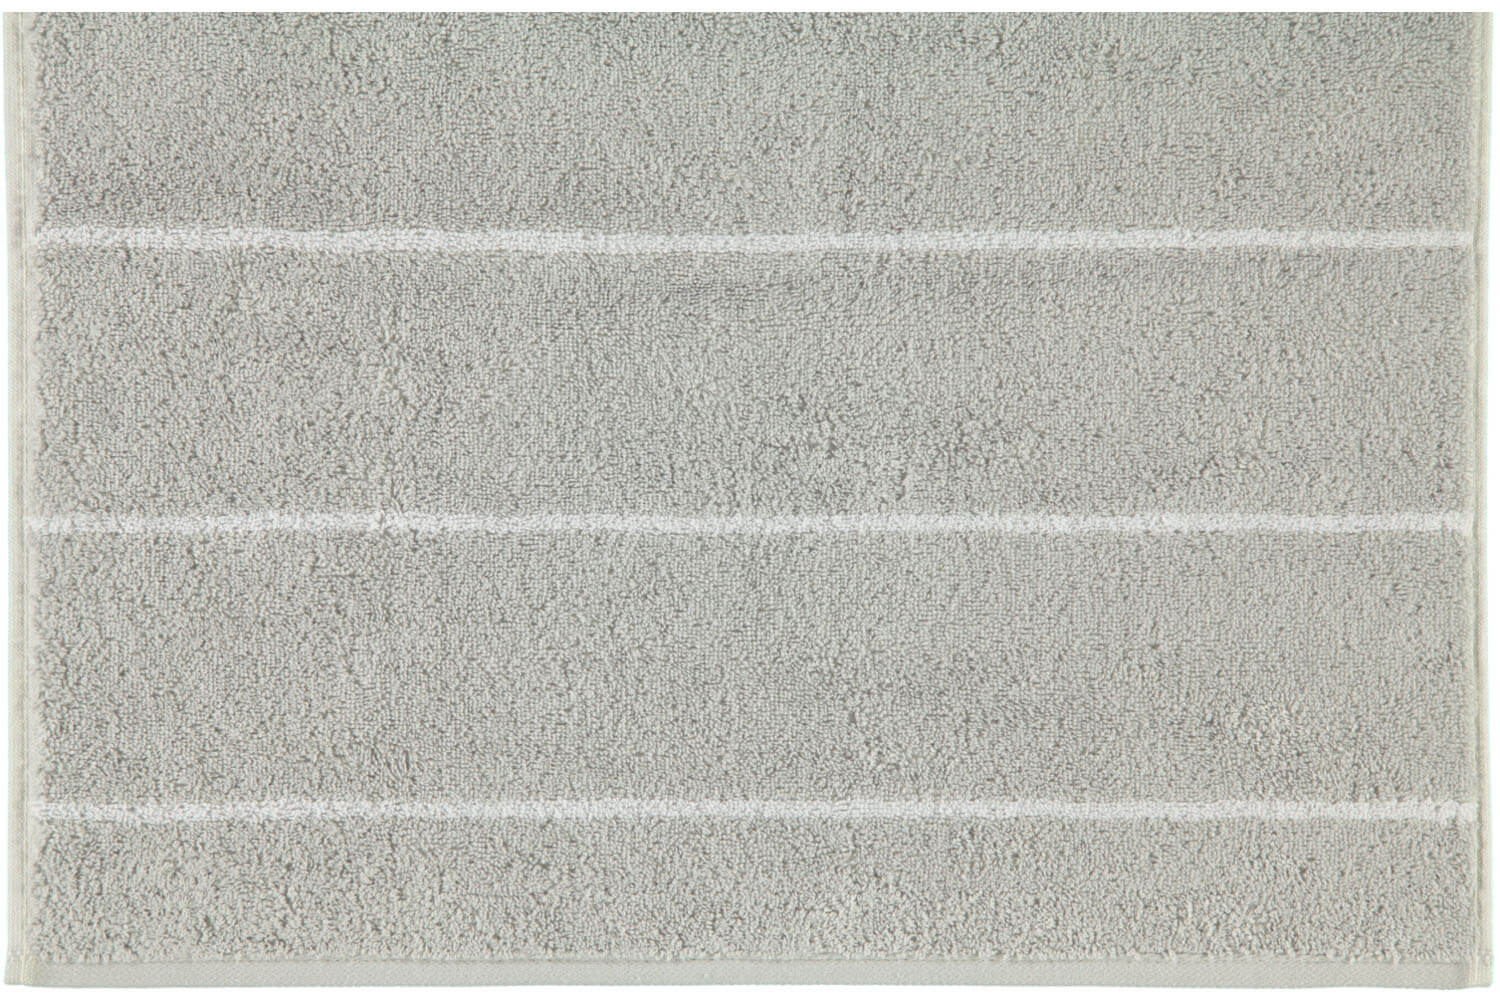 Махровое полотенце Casual Streifen Platin ☞ Размер: 70 x 140 см